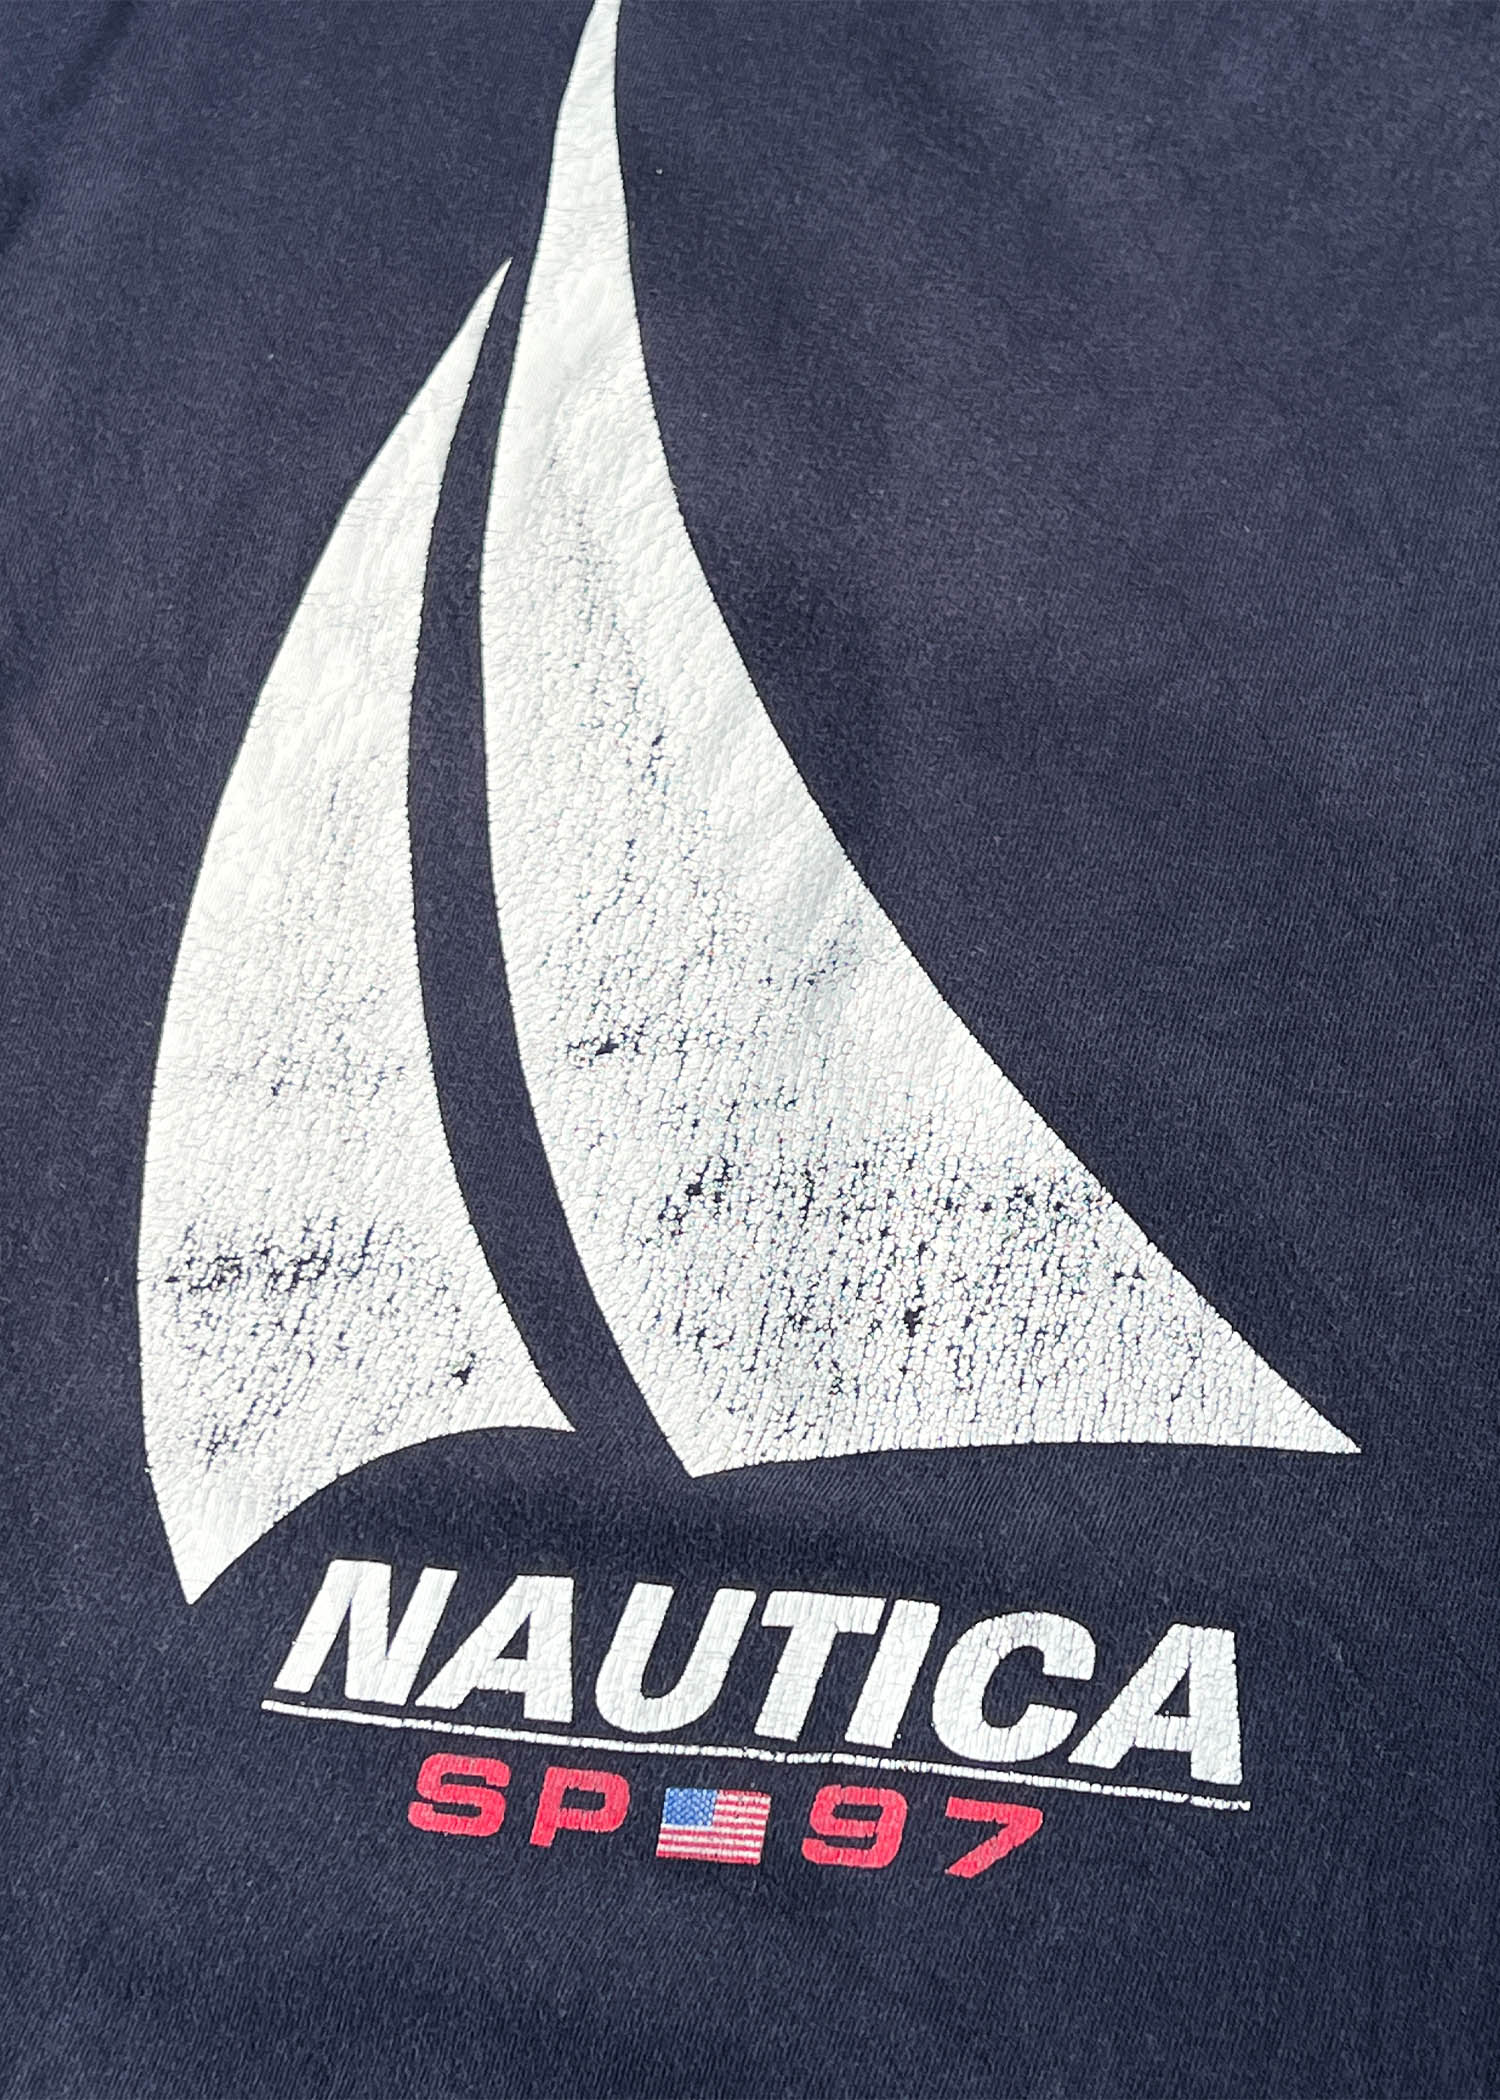 Nautica t-shirts